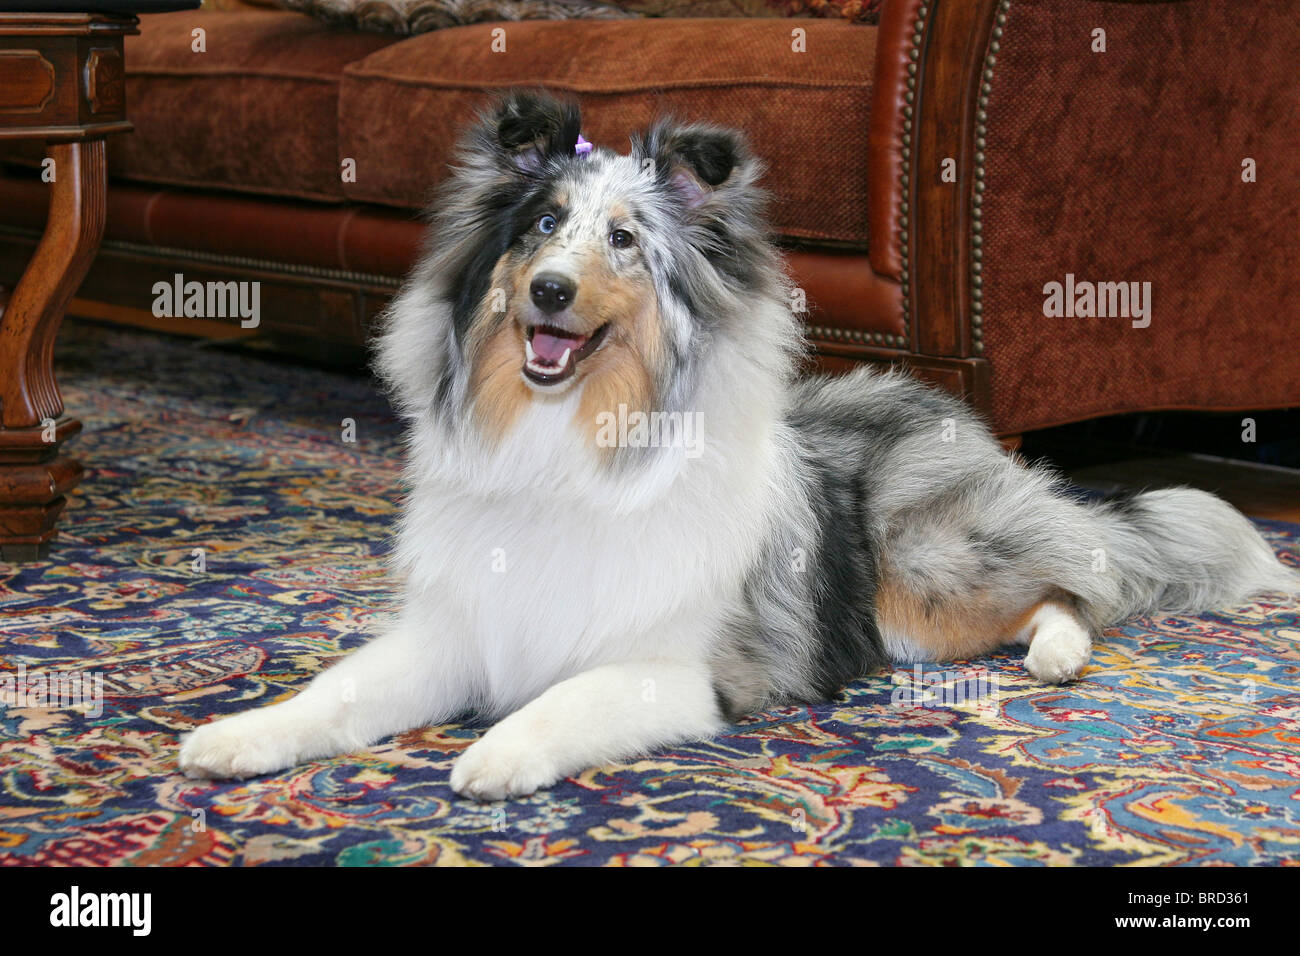 one pretty Sheltie dog headshot portrait in a livingroom natural setting Stock Photo